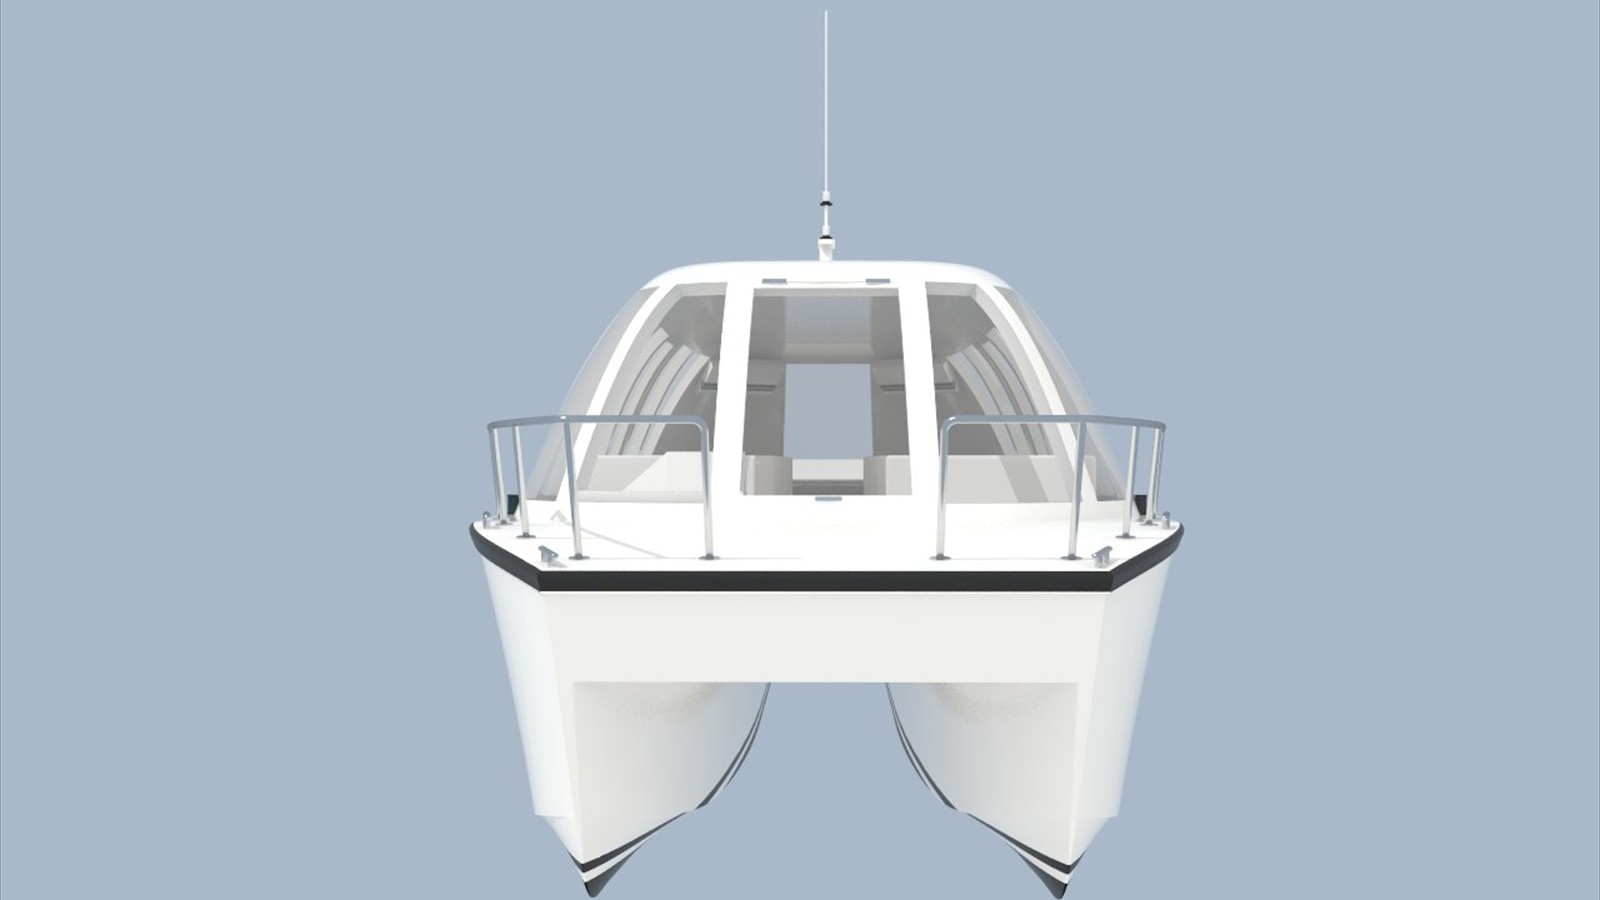 enclosed_cabin_catamaran_watertaxi_8